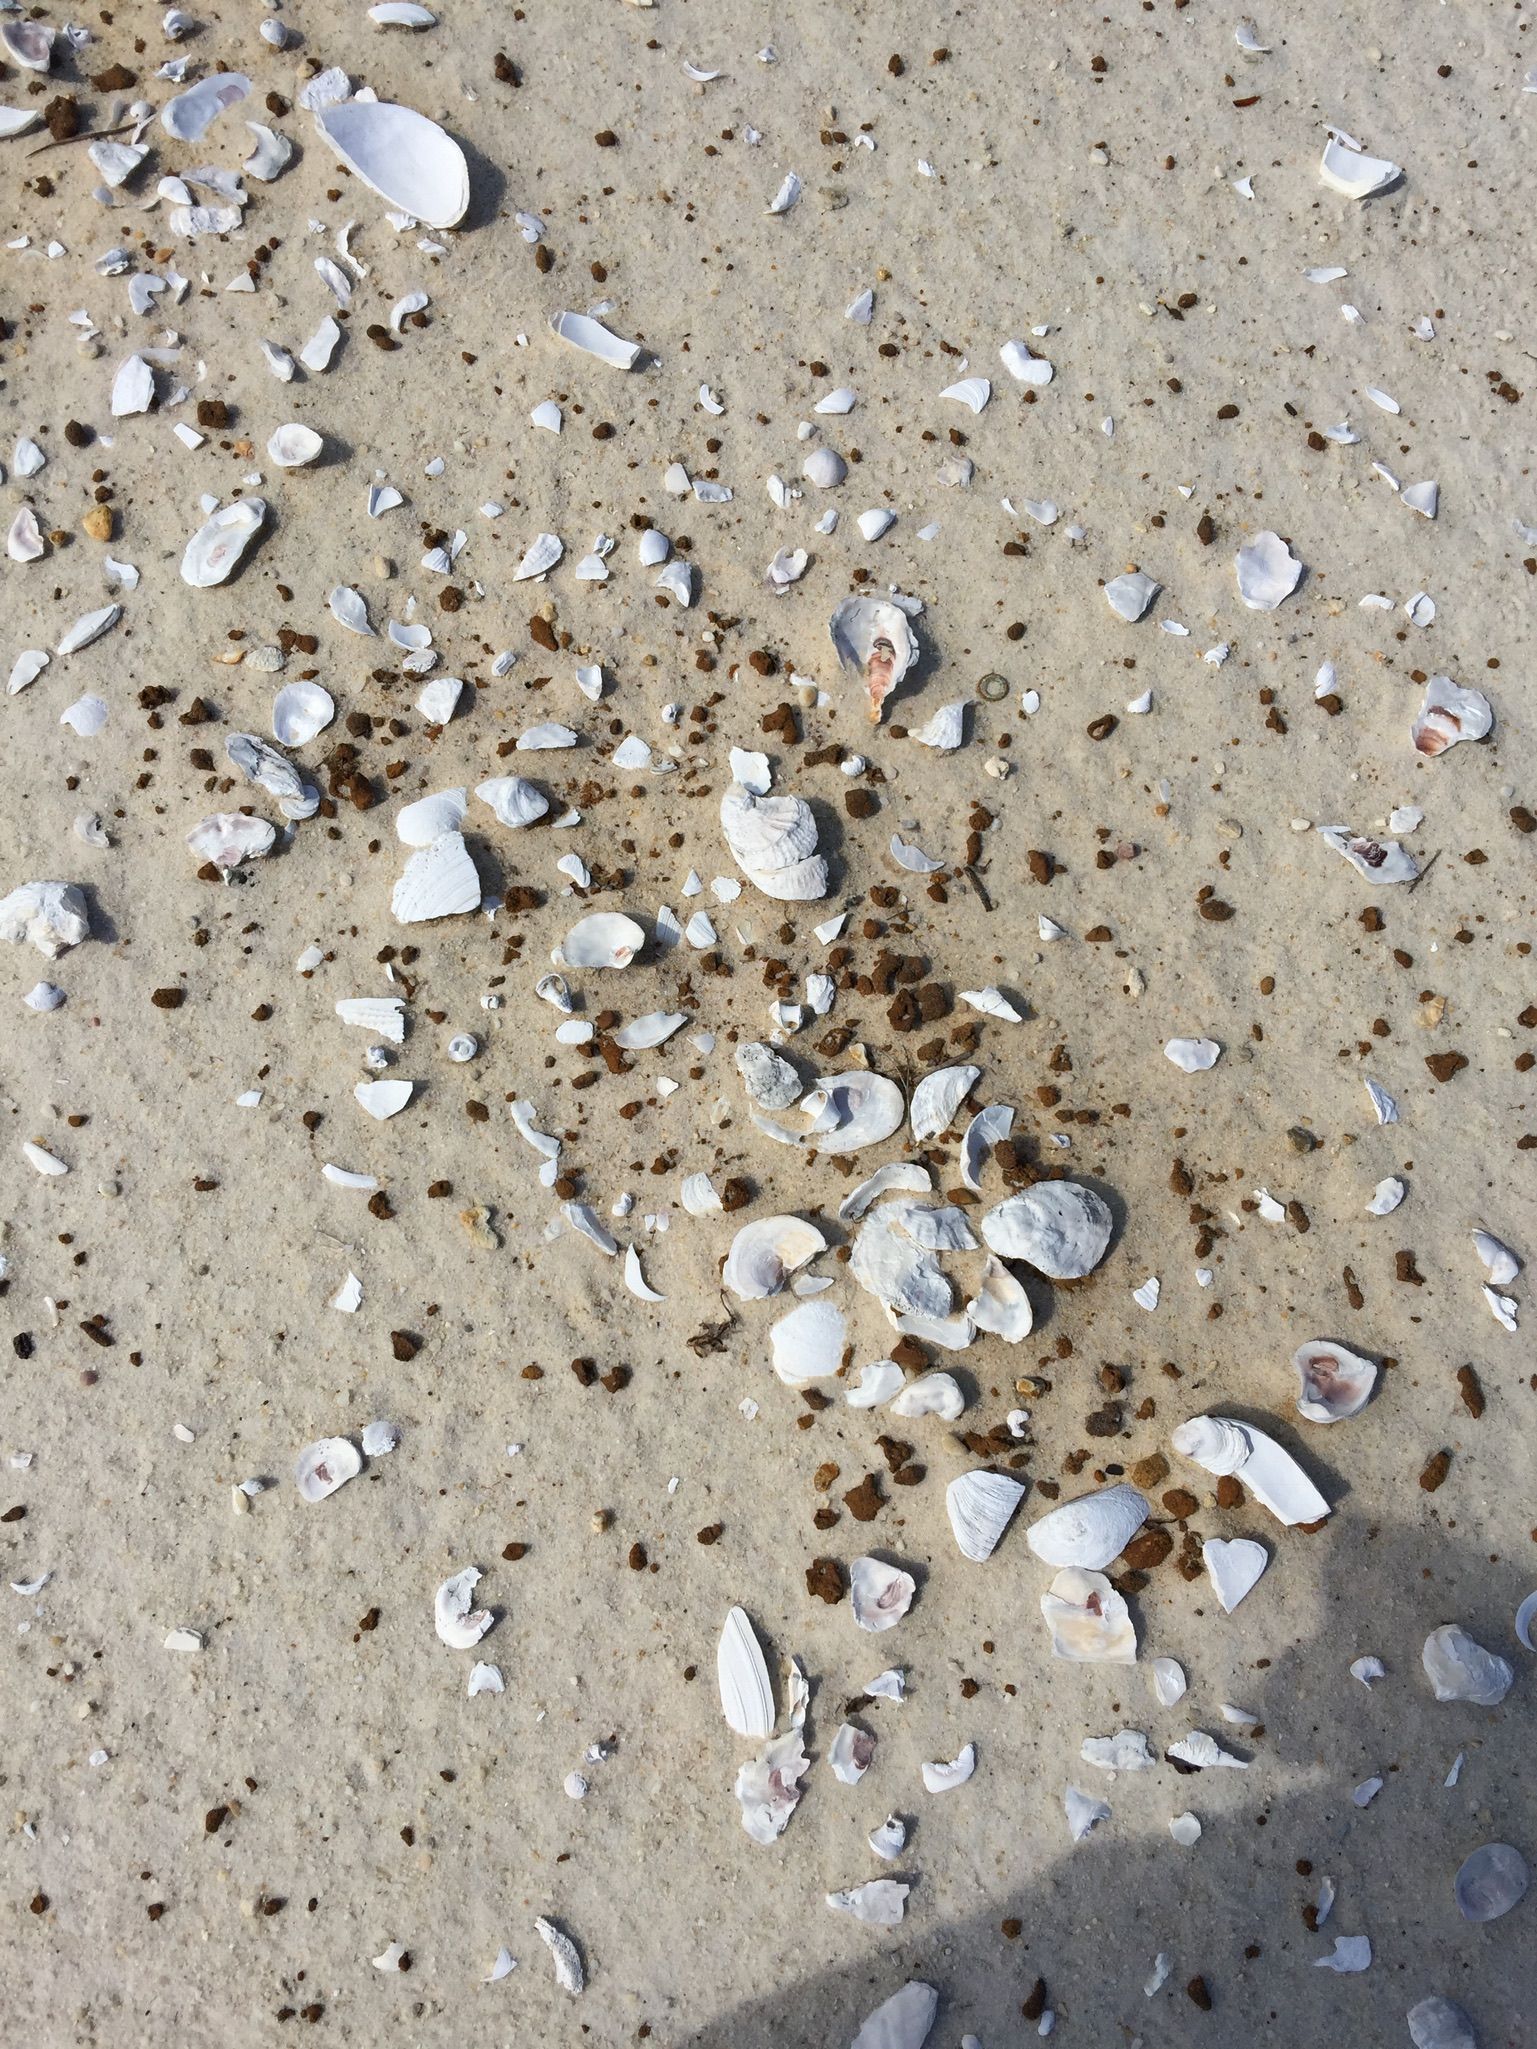 Beach shell debris - Cat Island | Visual Texture | Pinterest ...